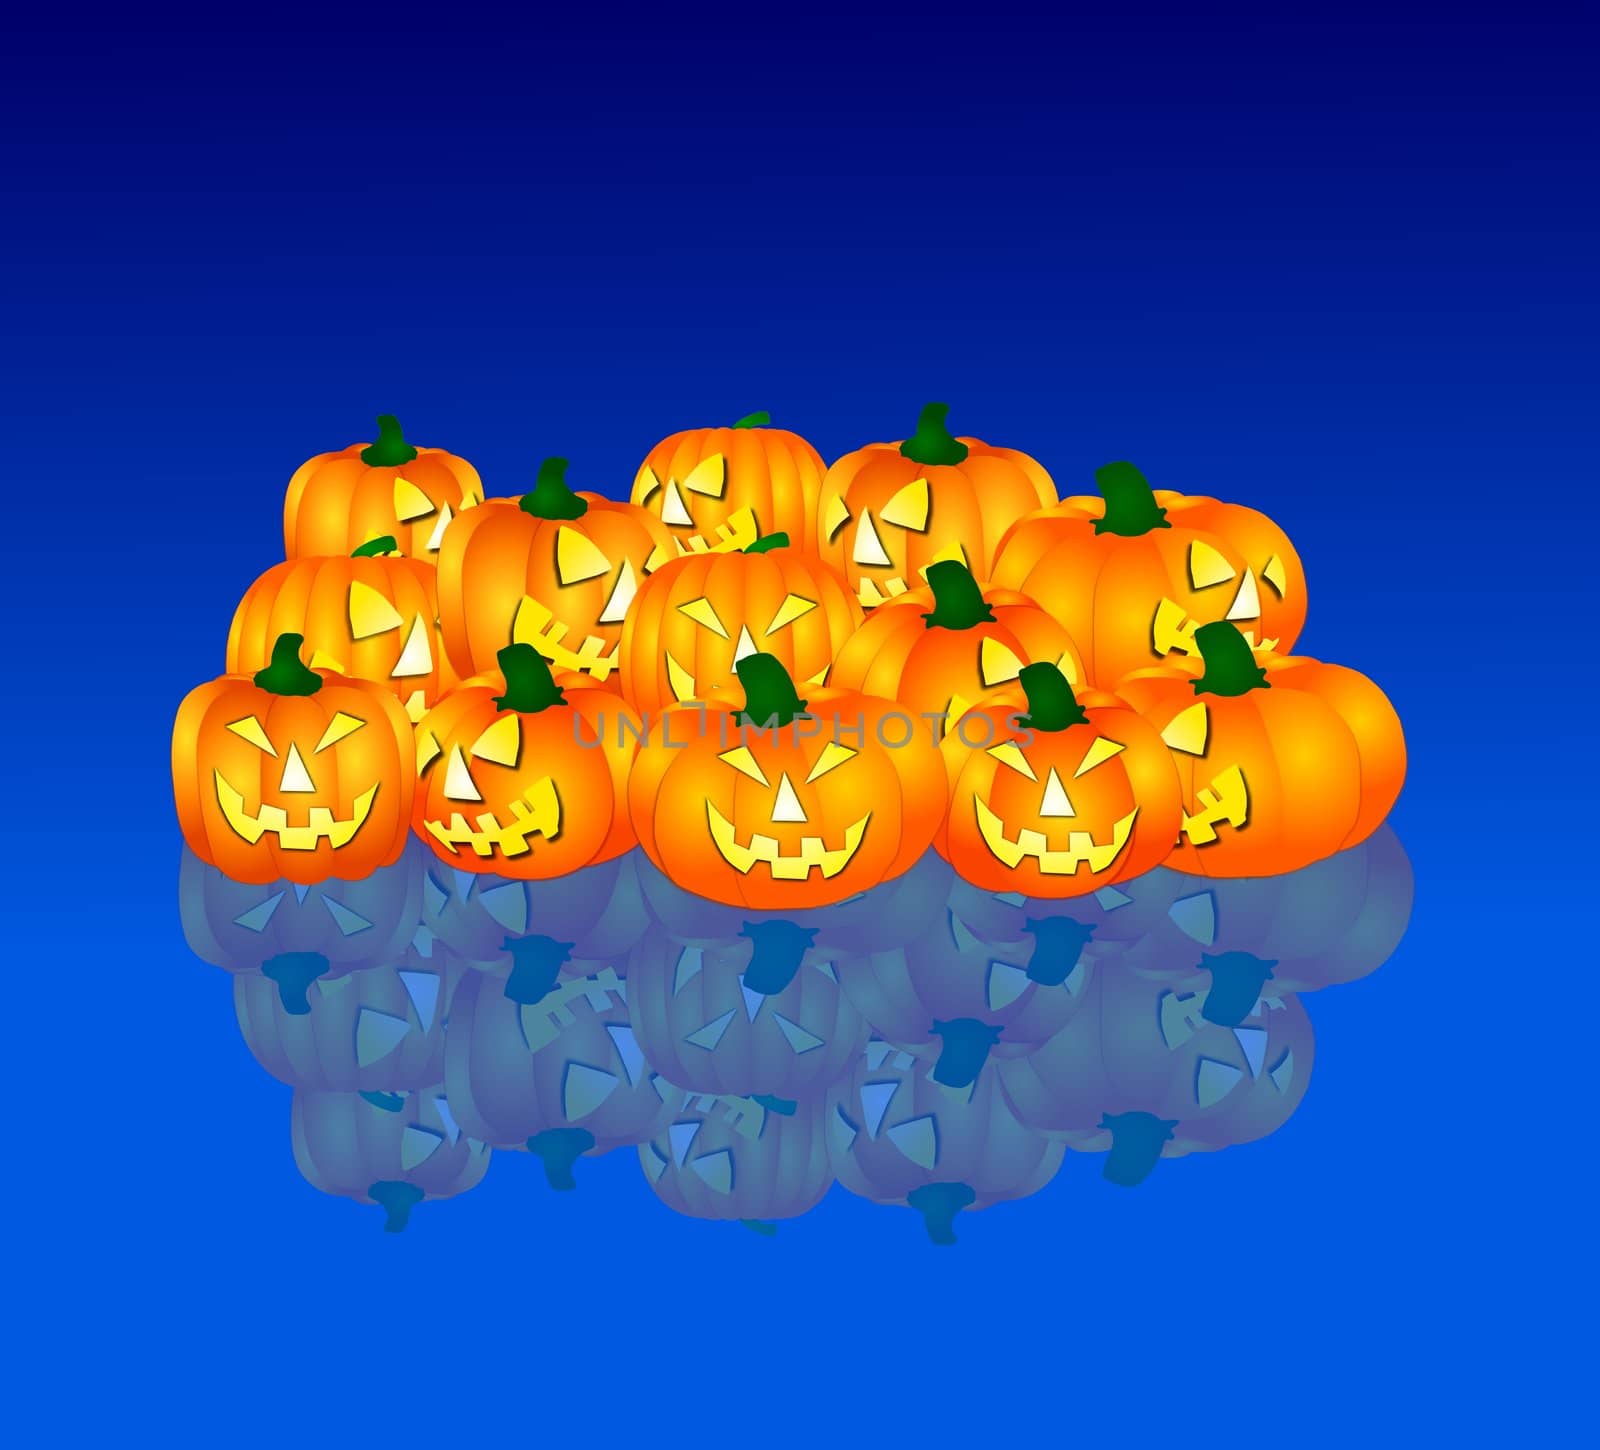  Halloween  Halloween Pumpkins by peromarketing